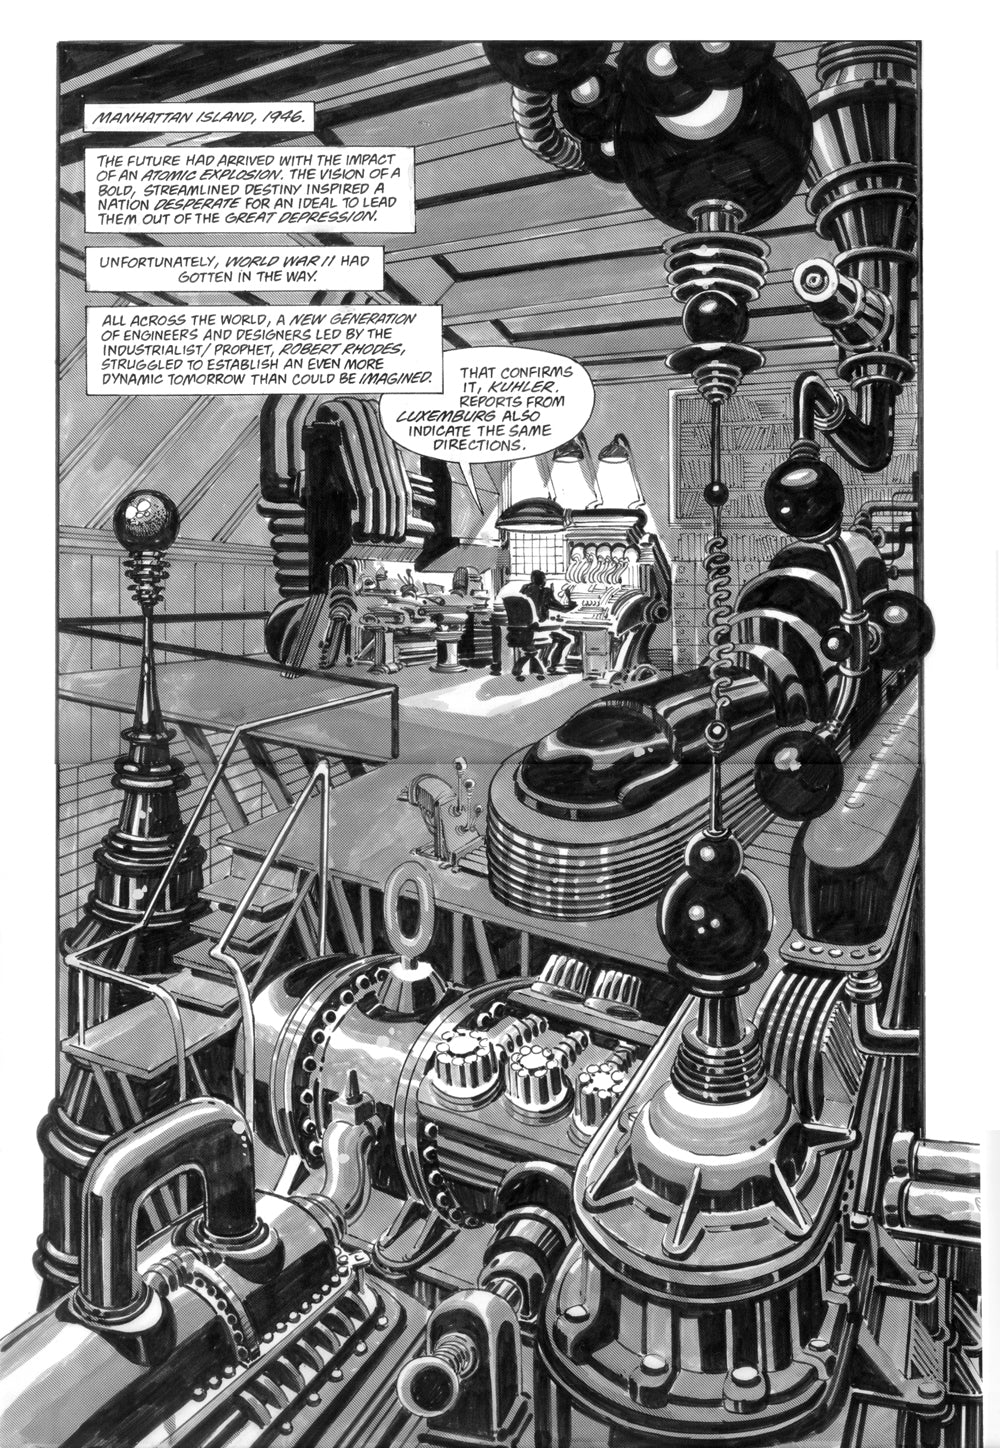 Terminal Point, Dark Horse Comics Book 2 page 1, 1993